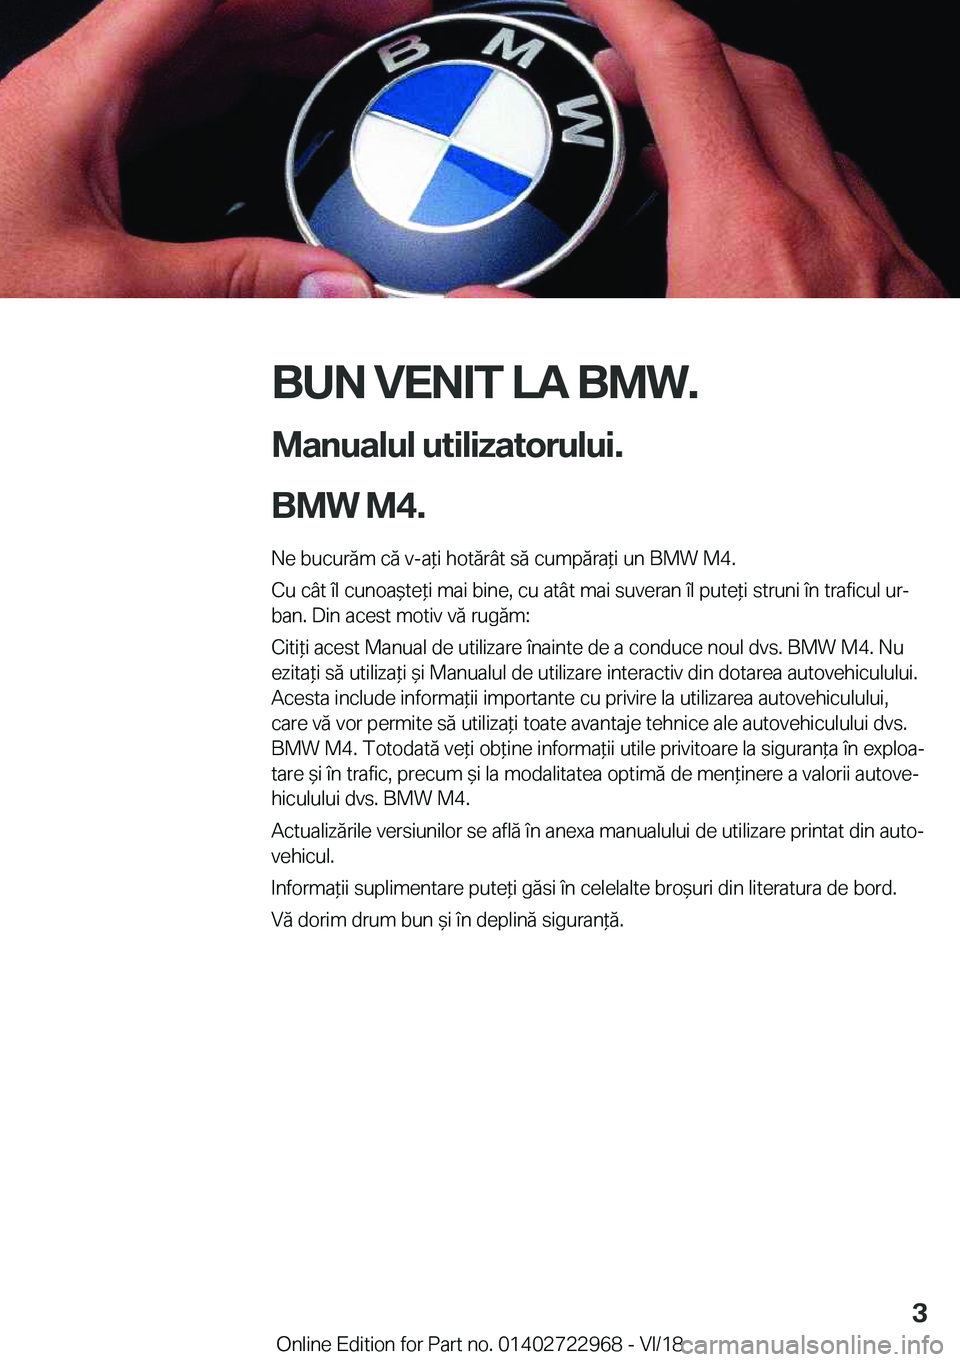 BMW M4 2019  Ghiduri De Utilizare (in Romanian) �B�U�N��V�E�N�I�T��L�A��B�M�W�.�M�a�n�u�a�l�u�l��u�t�i�l�i�z�a�t�o�r�u�l�u�i�.
�B�M�W��M�4�. �N�e��b�u�c�u�r�